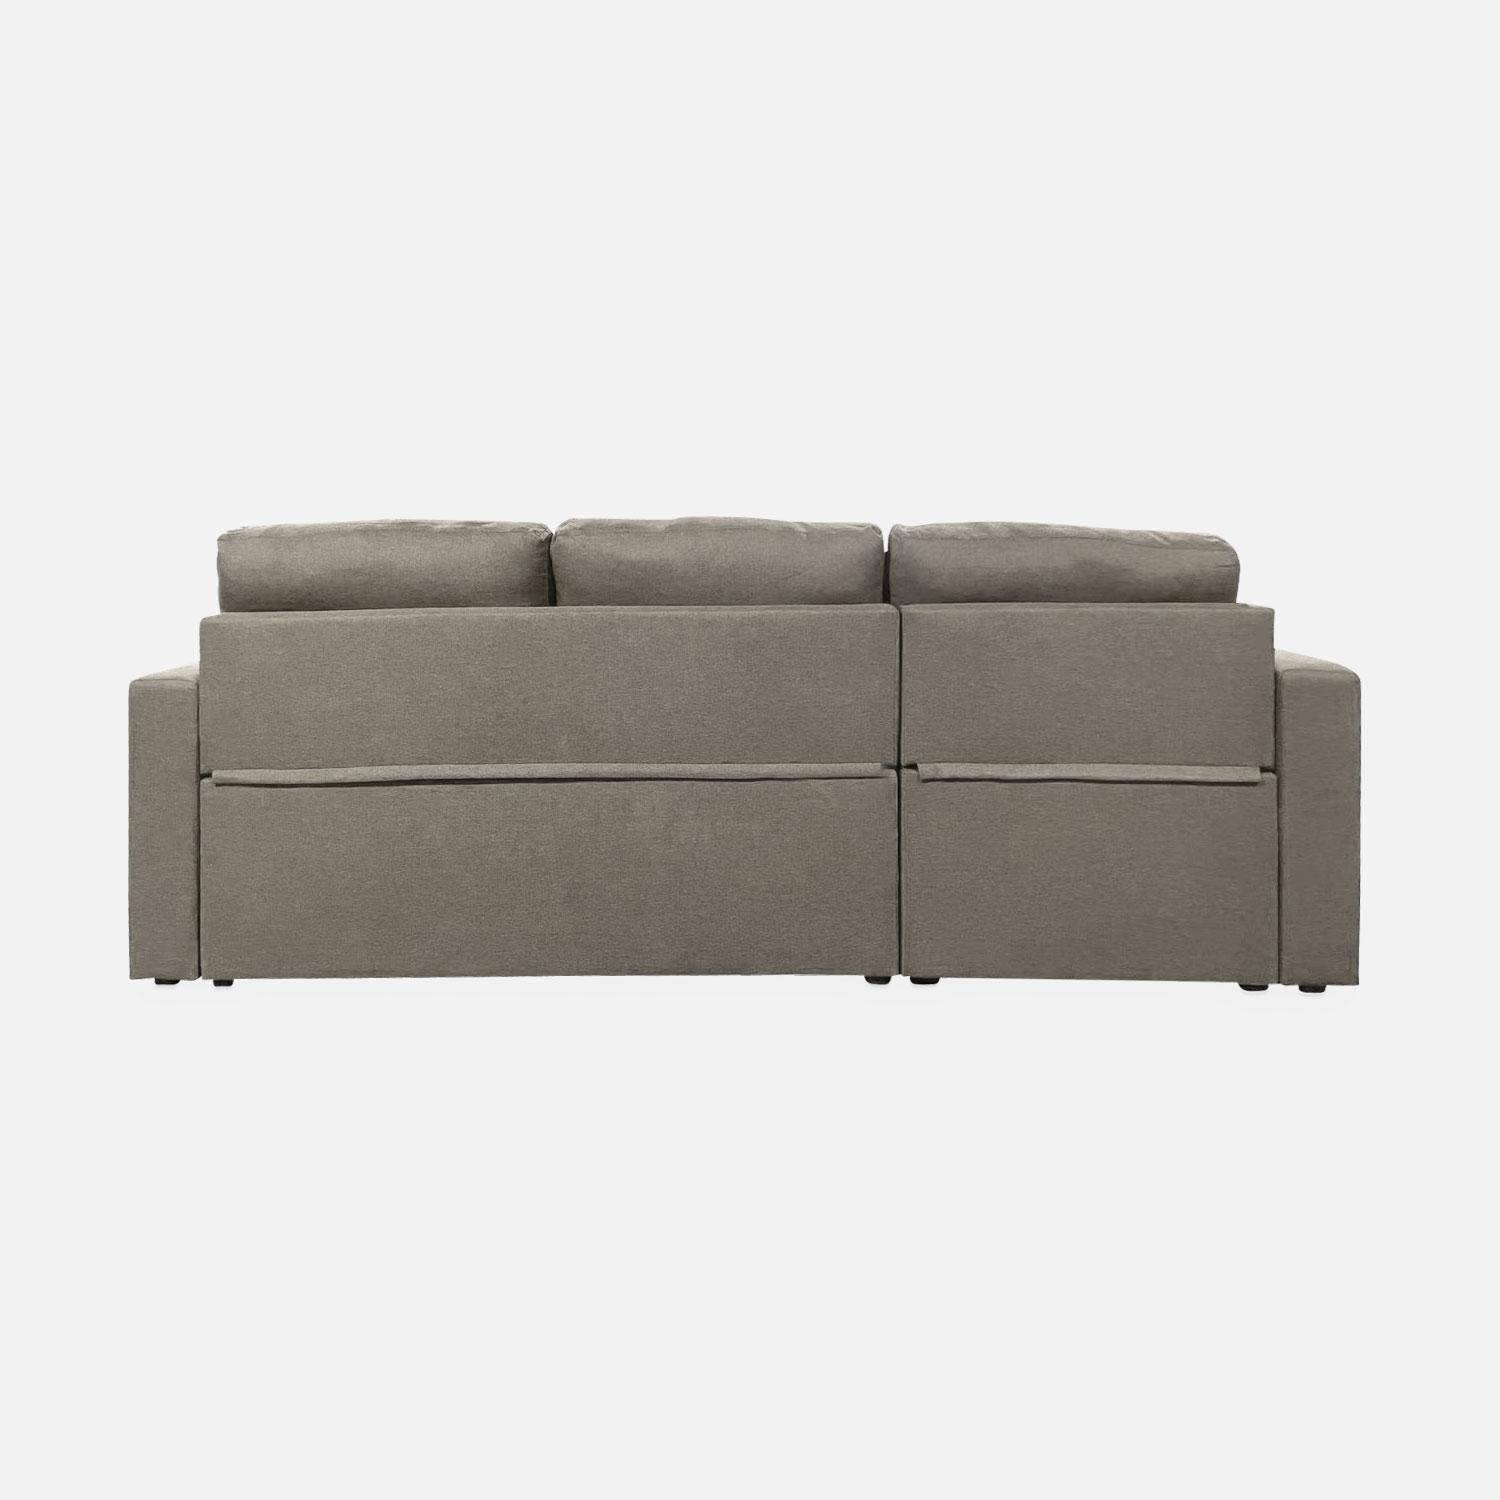 3-seater reversible brown corner sofa bed with storage box, brown, L219xD81xH68cm, IDA,sweeek,Photo6